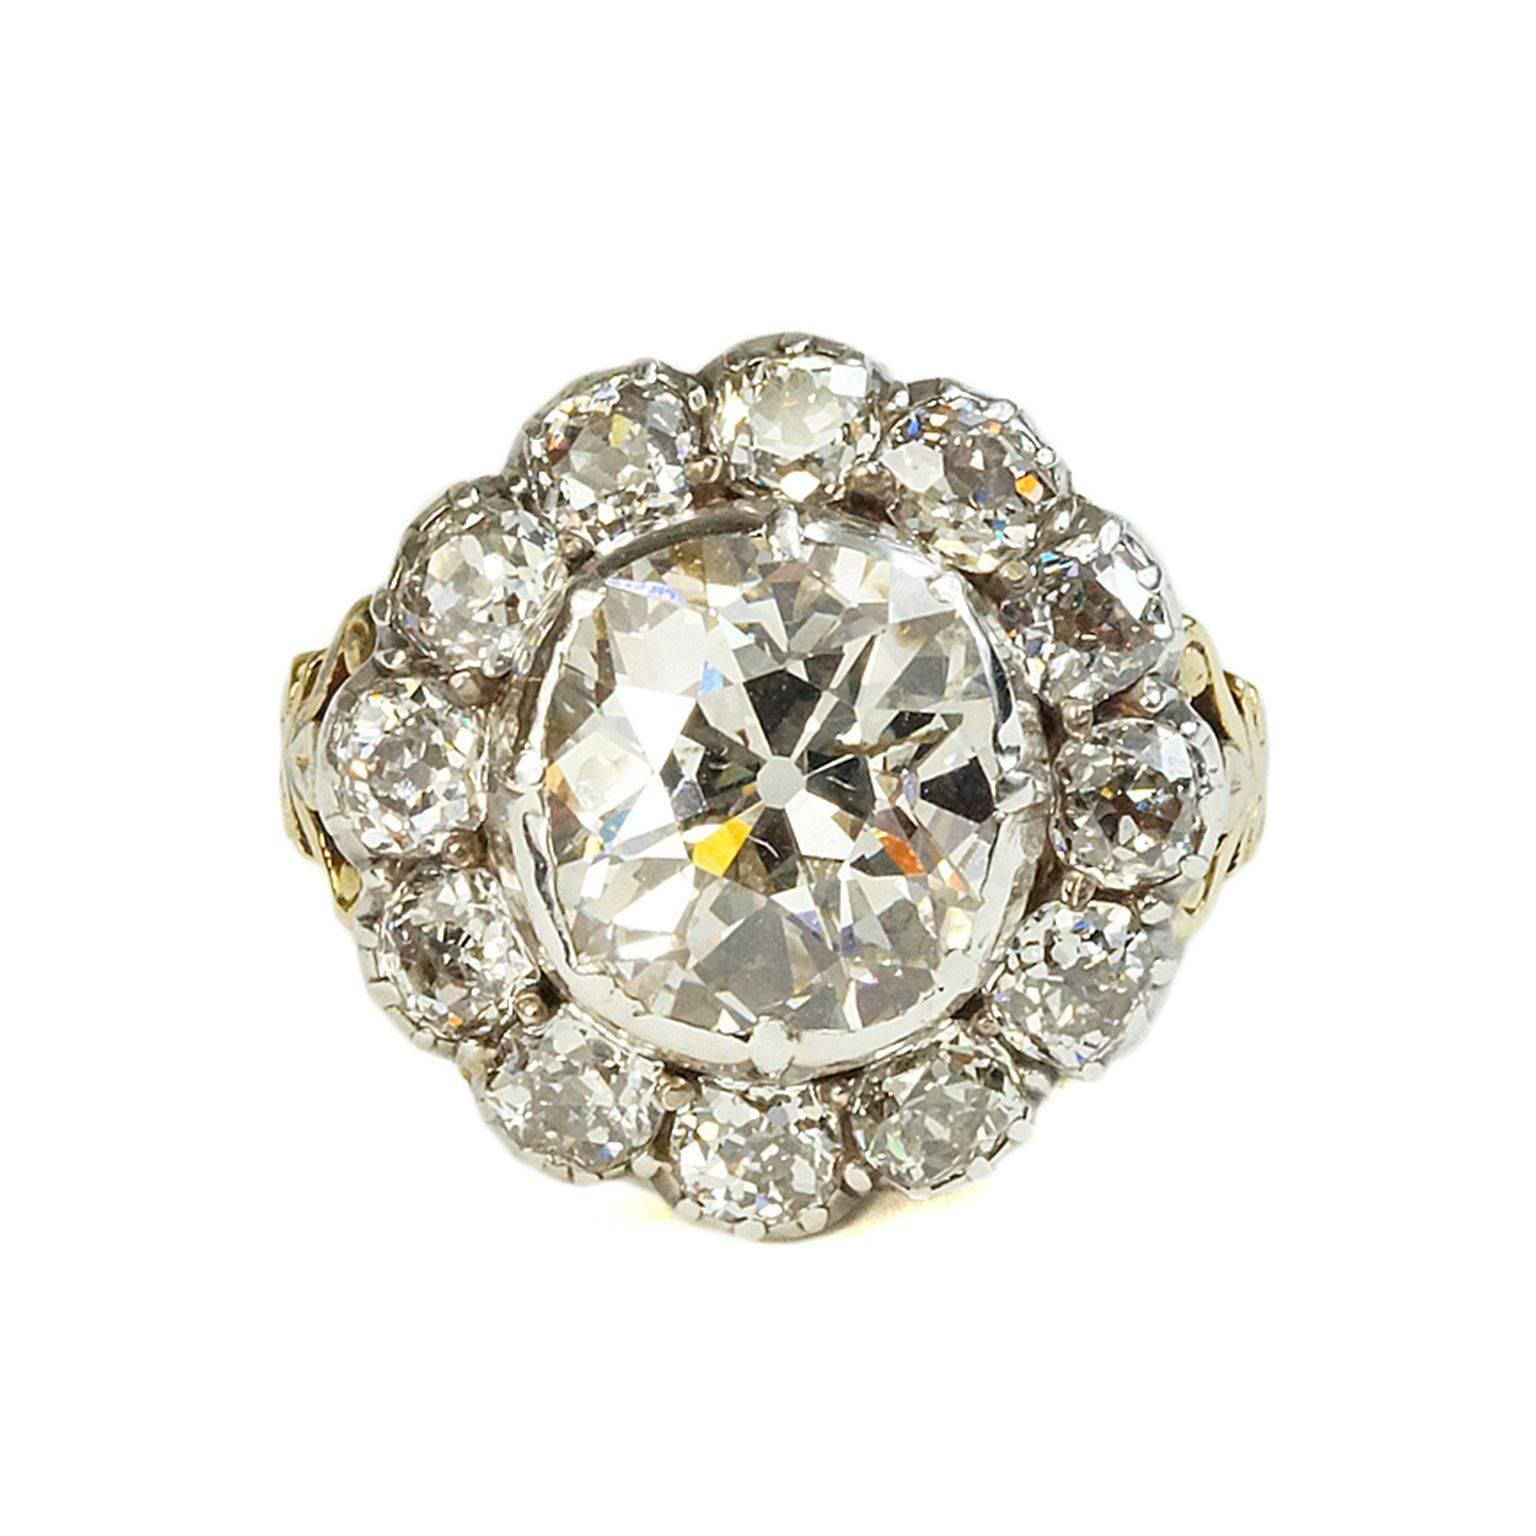 Old European Cut Victorian 19th Century Diamond Ring 8 Carat For Sale